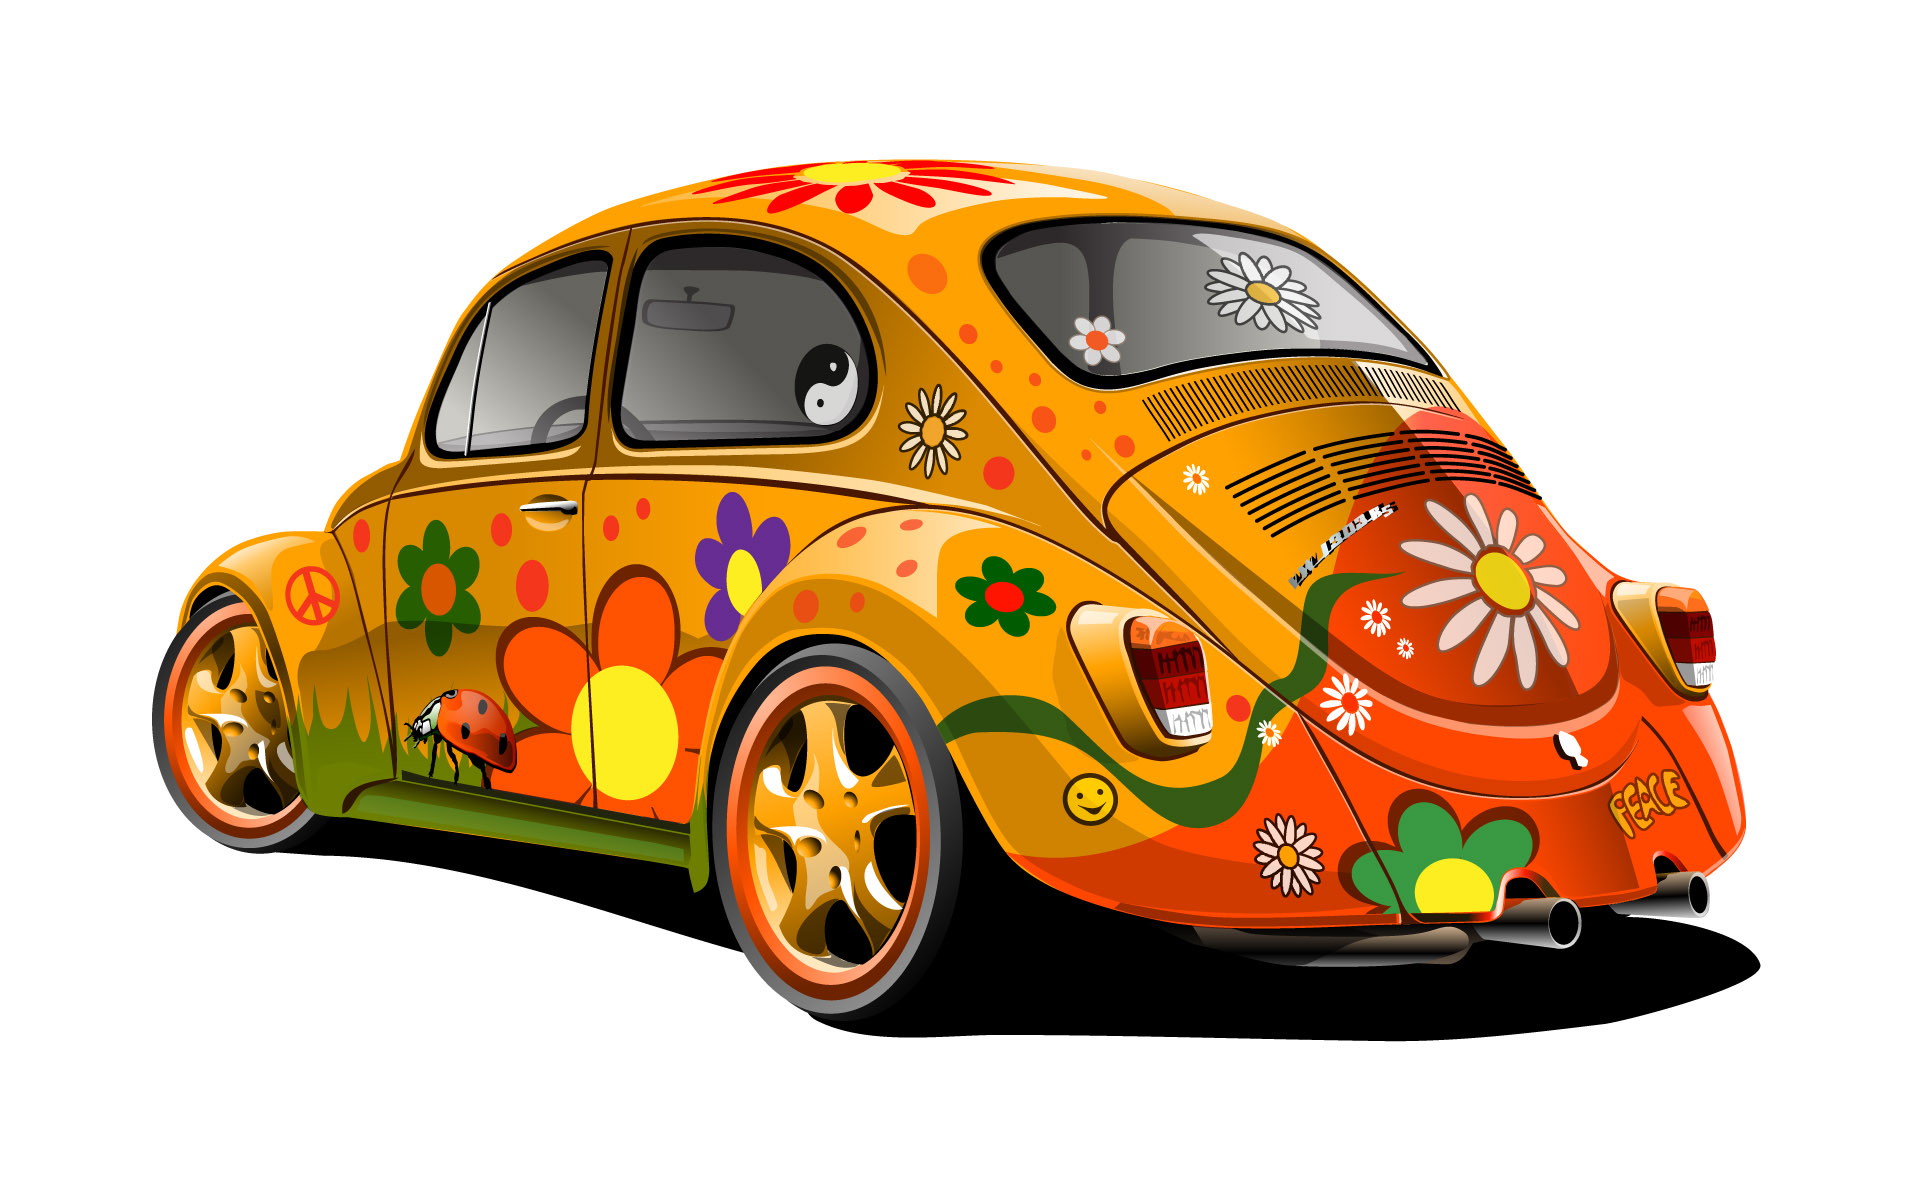 Previous, Drawn wallpapers - Hippie Car wallpaper